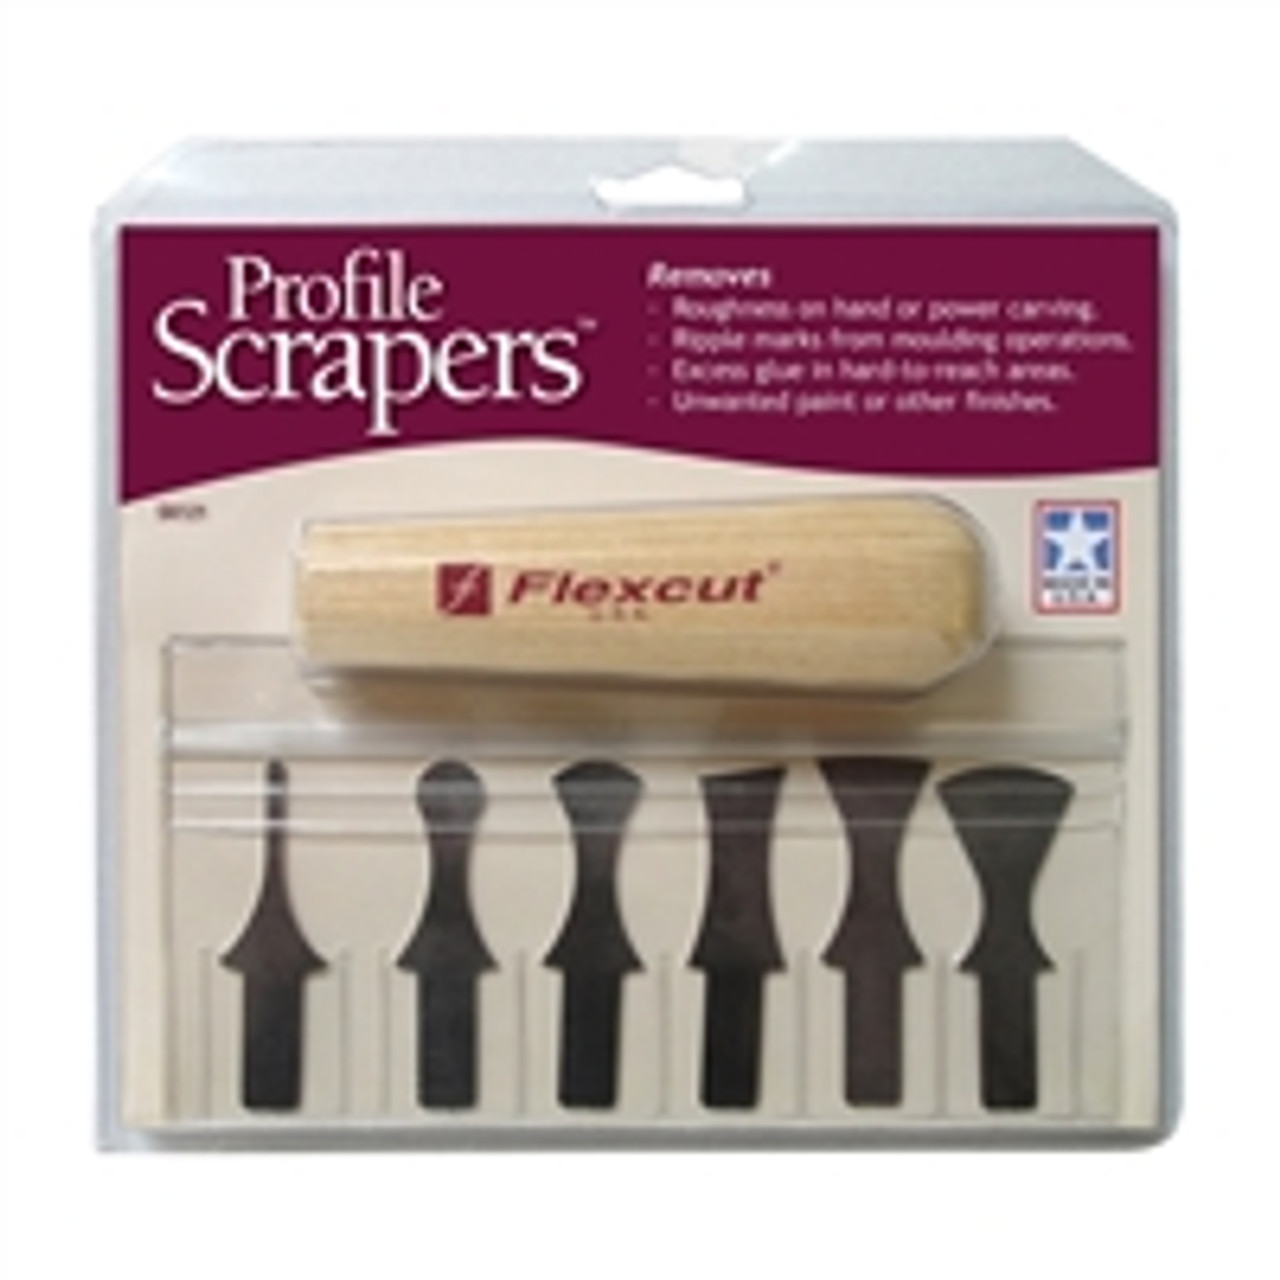 Flexcut 5-Pc. Craft Carver Kit - SK106